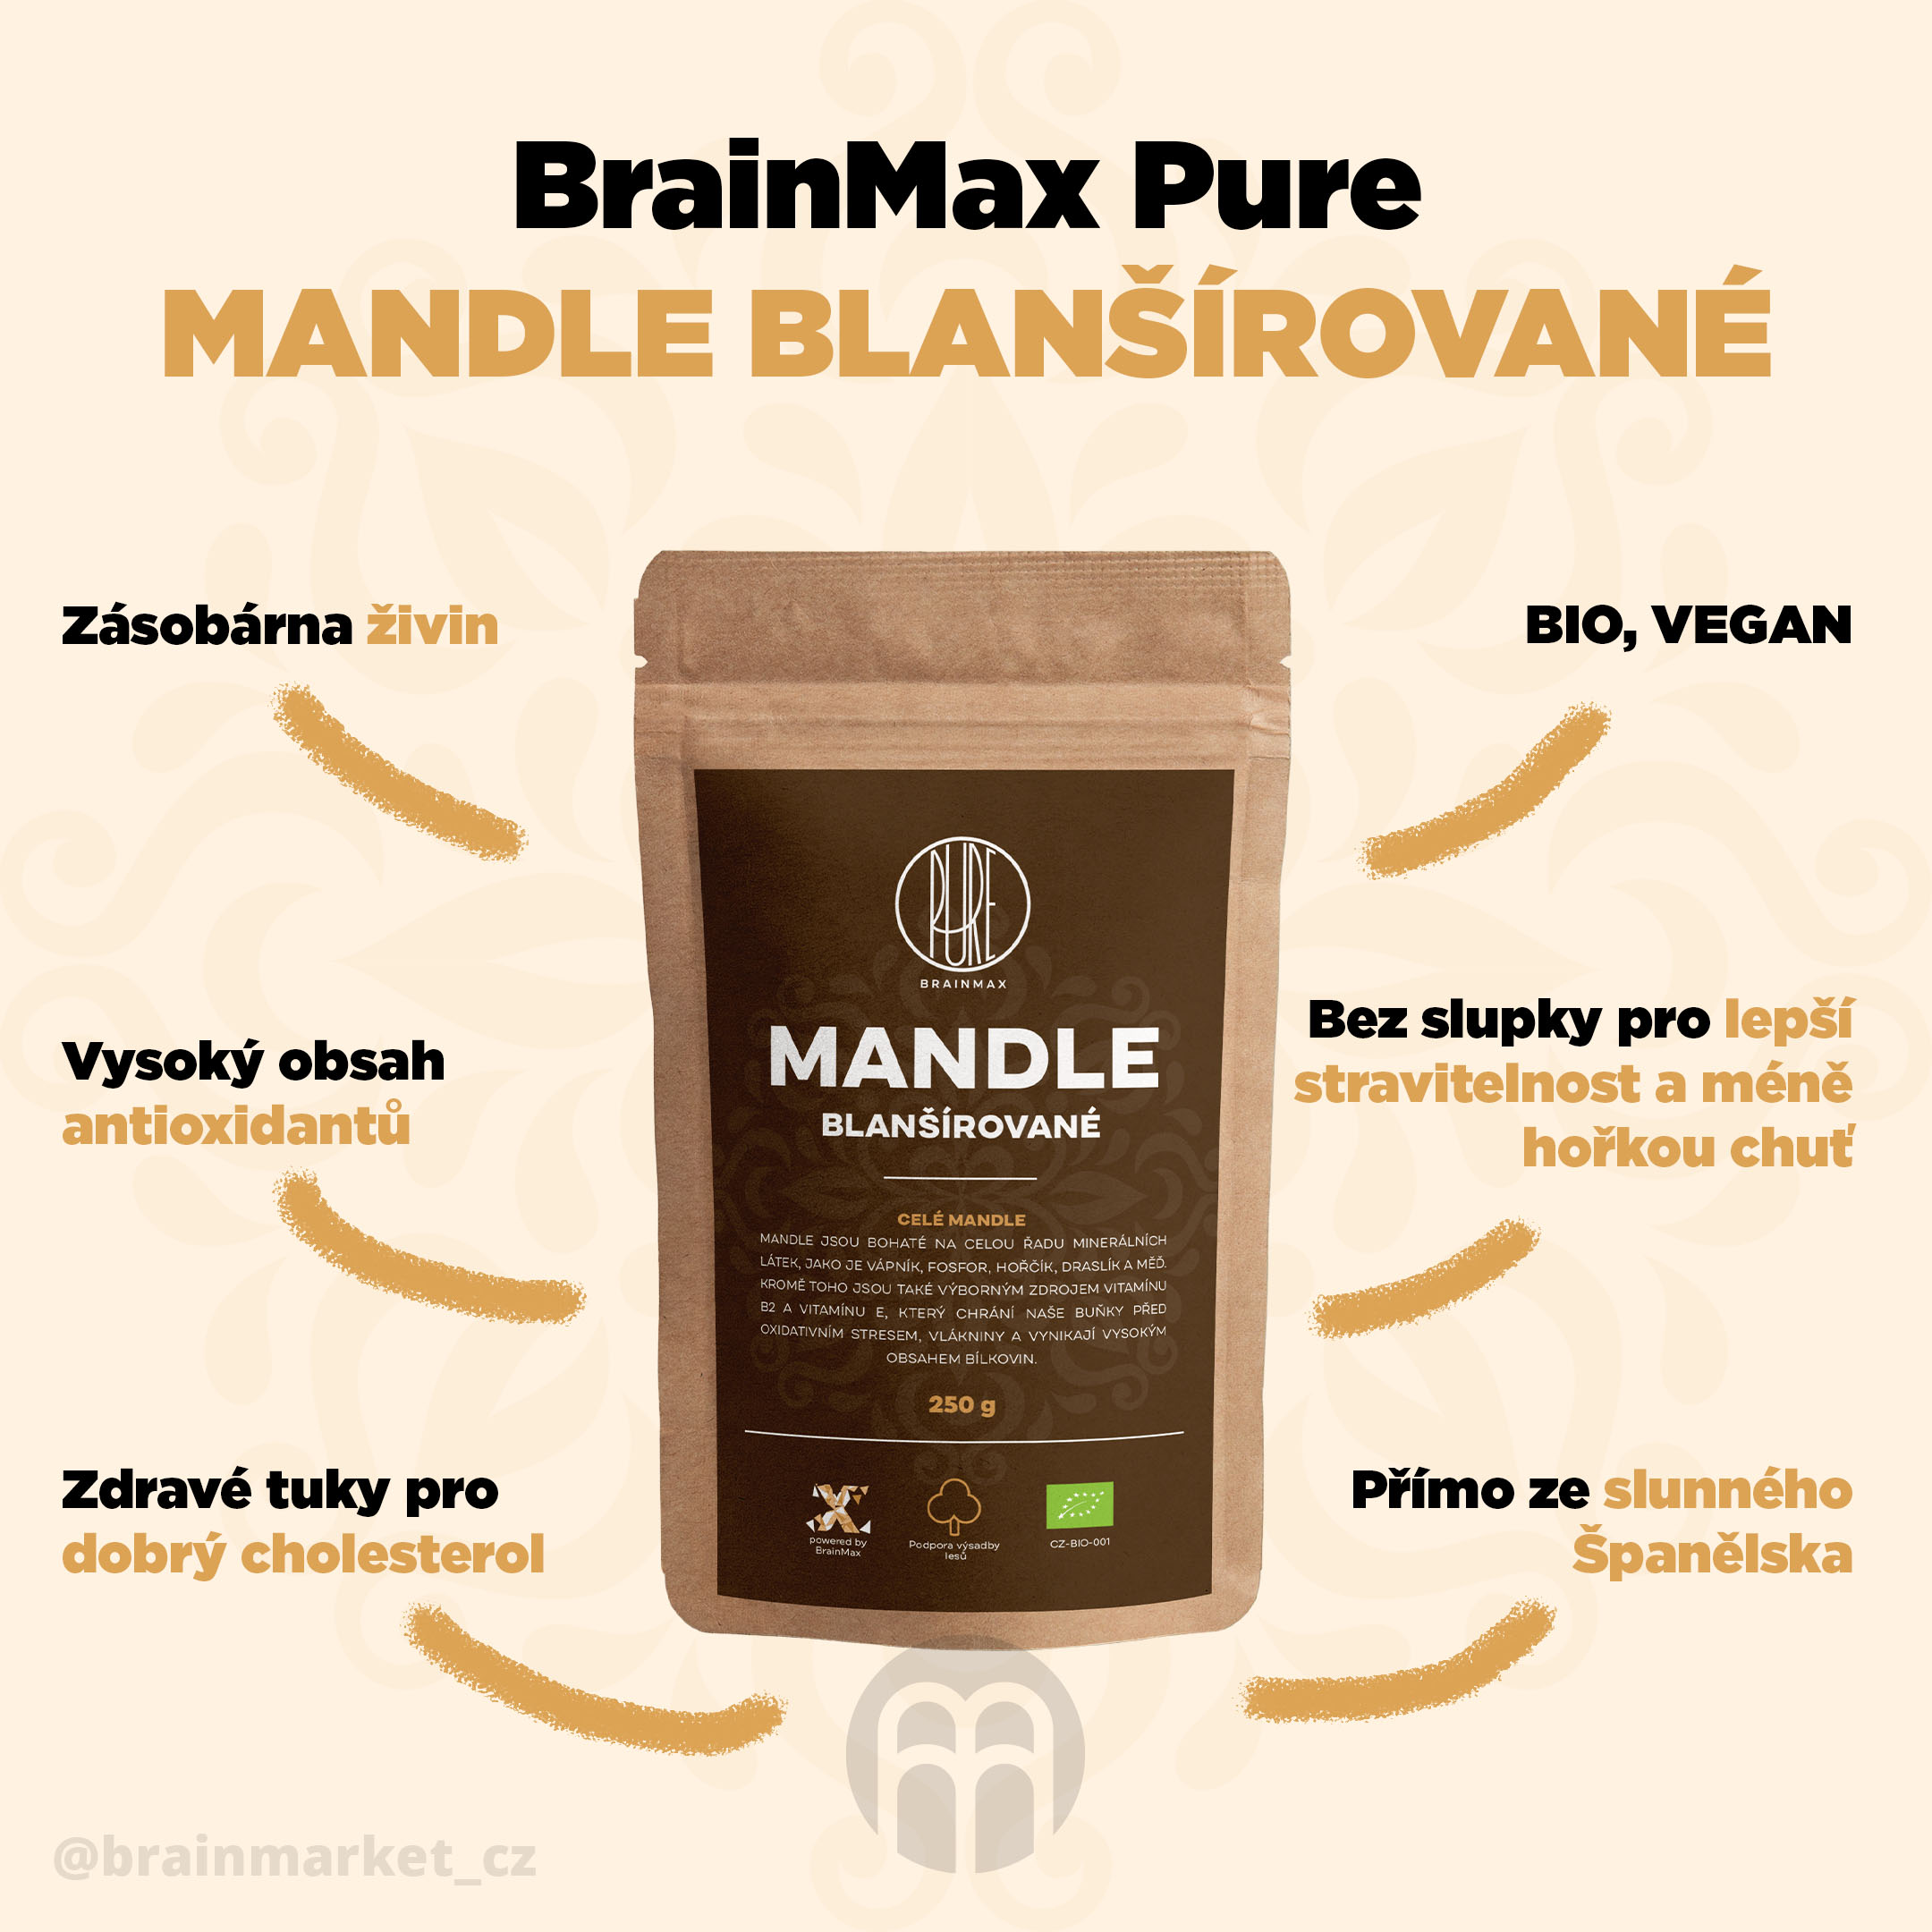 mandle-blansirovane-brainmax-pure-infografika-brainmarket-cz